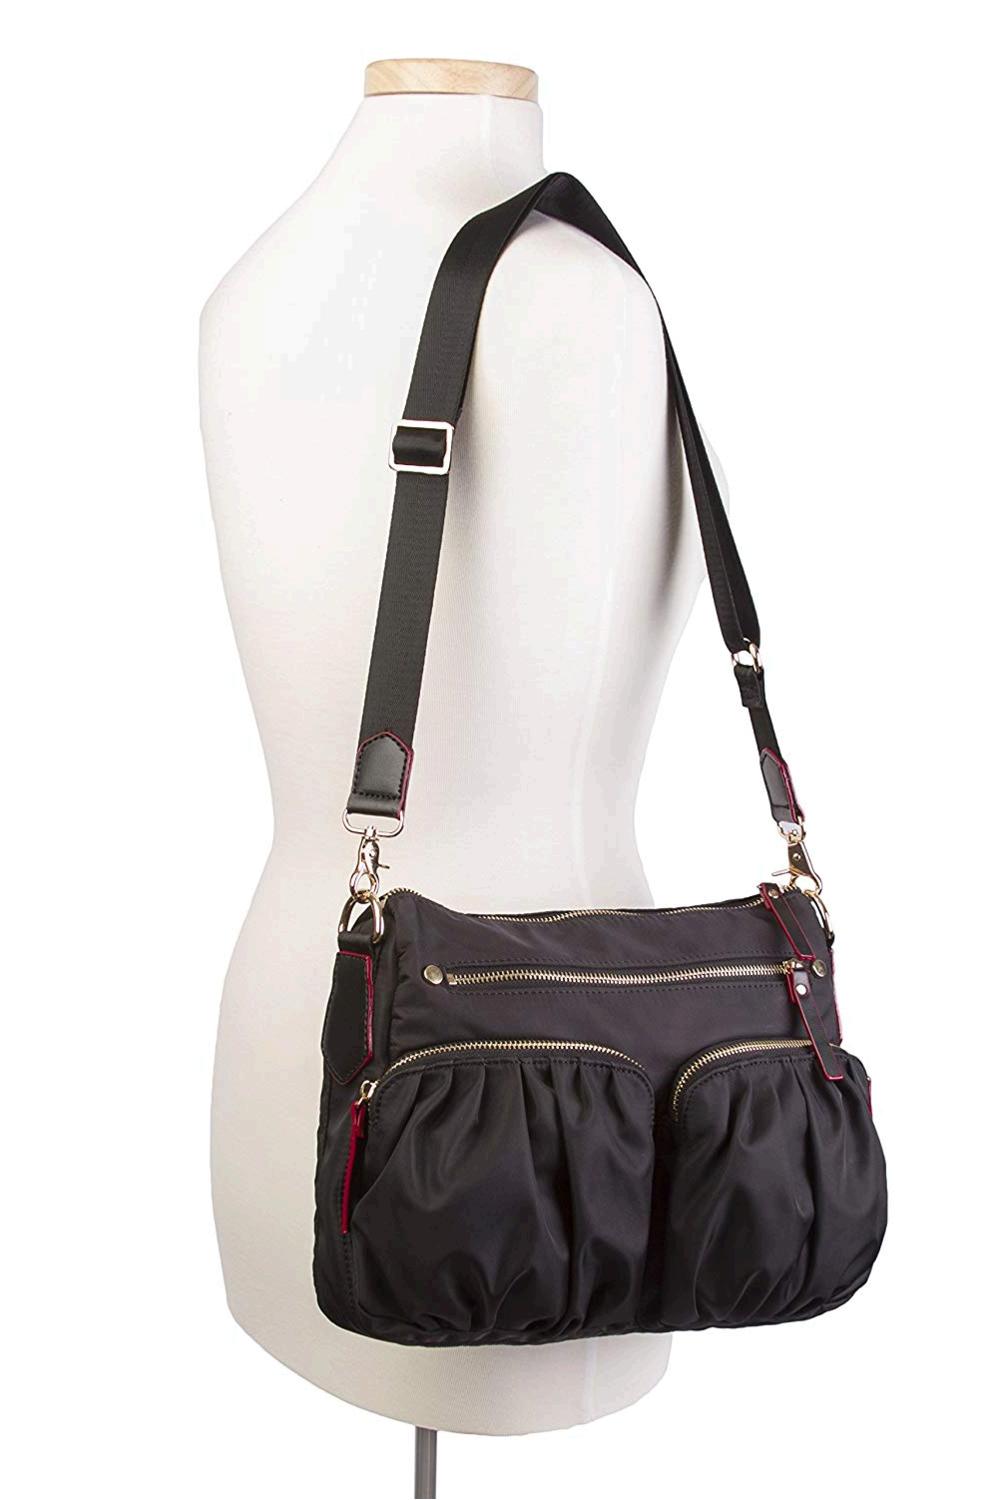 Korvara Nylon Crossbody Bag, Black - Premium Lightweight, Black, Size Medium 6Fo | eBay